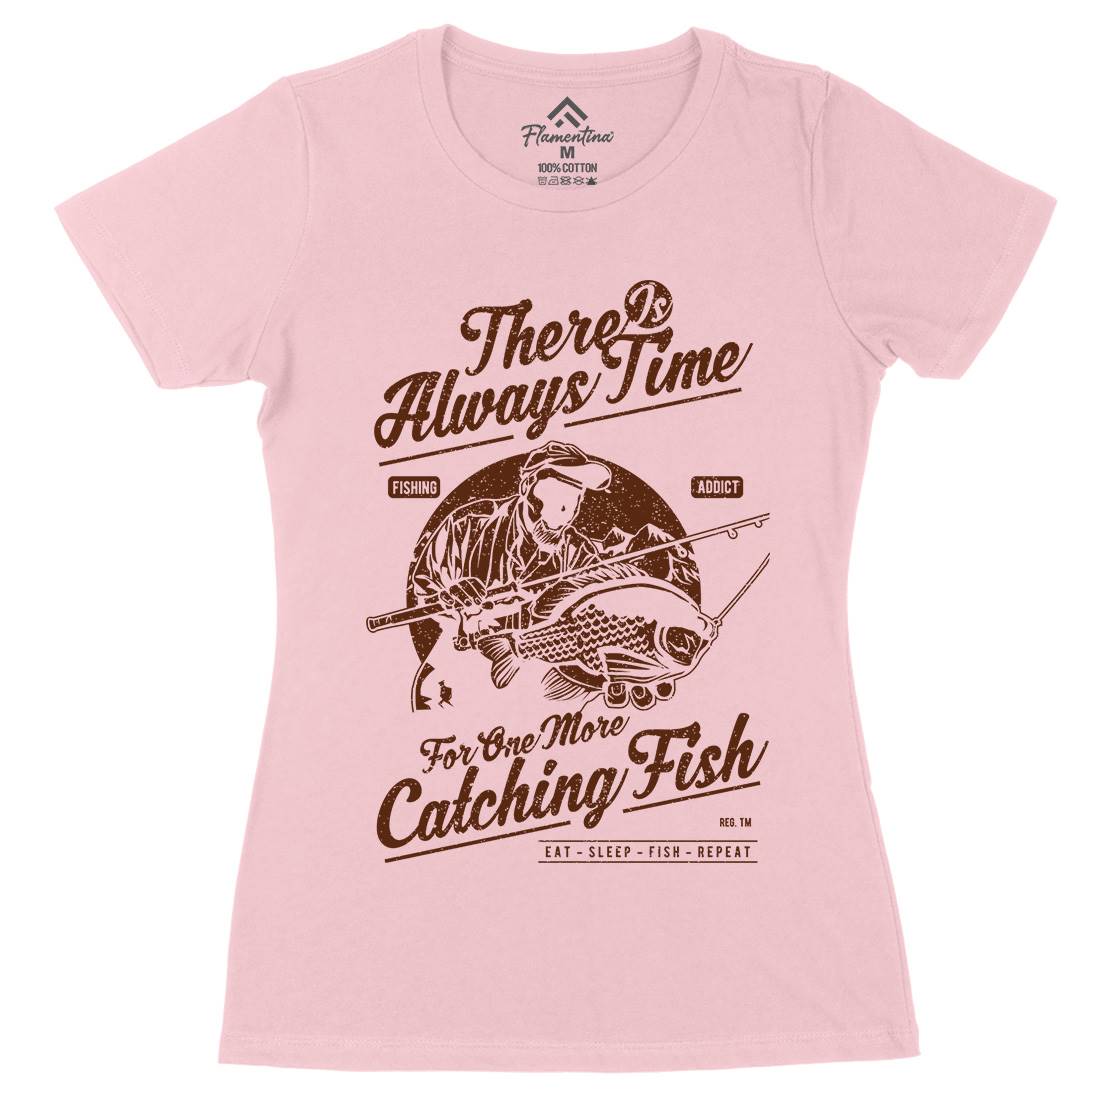 One More Catching Womens Organic Crew Neck T-Shirt Fishing A731